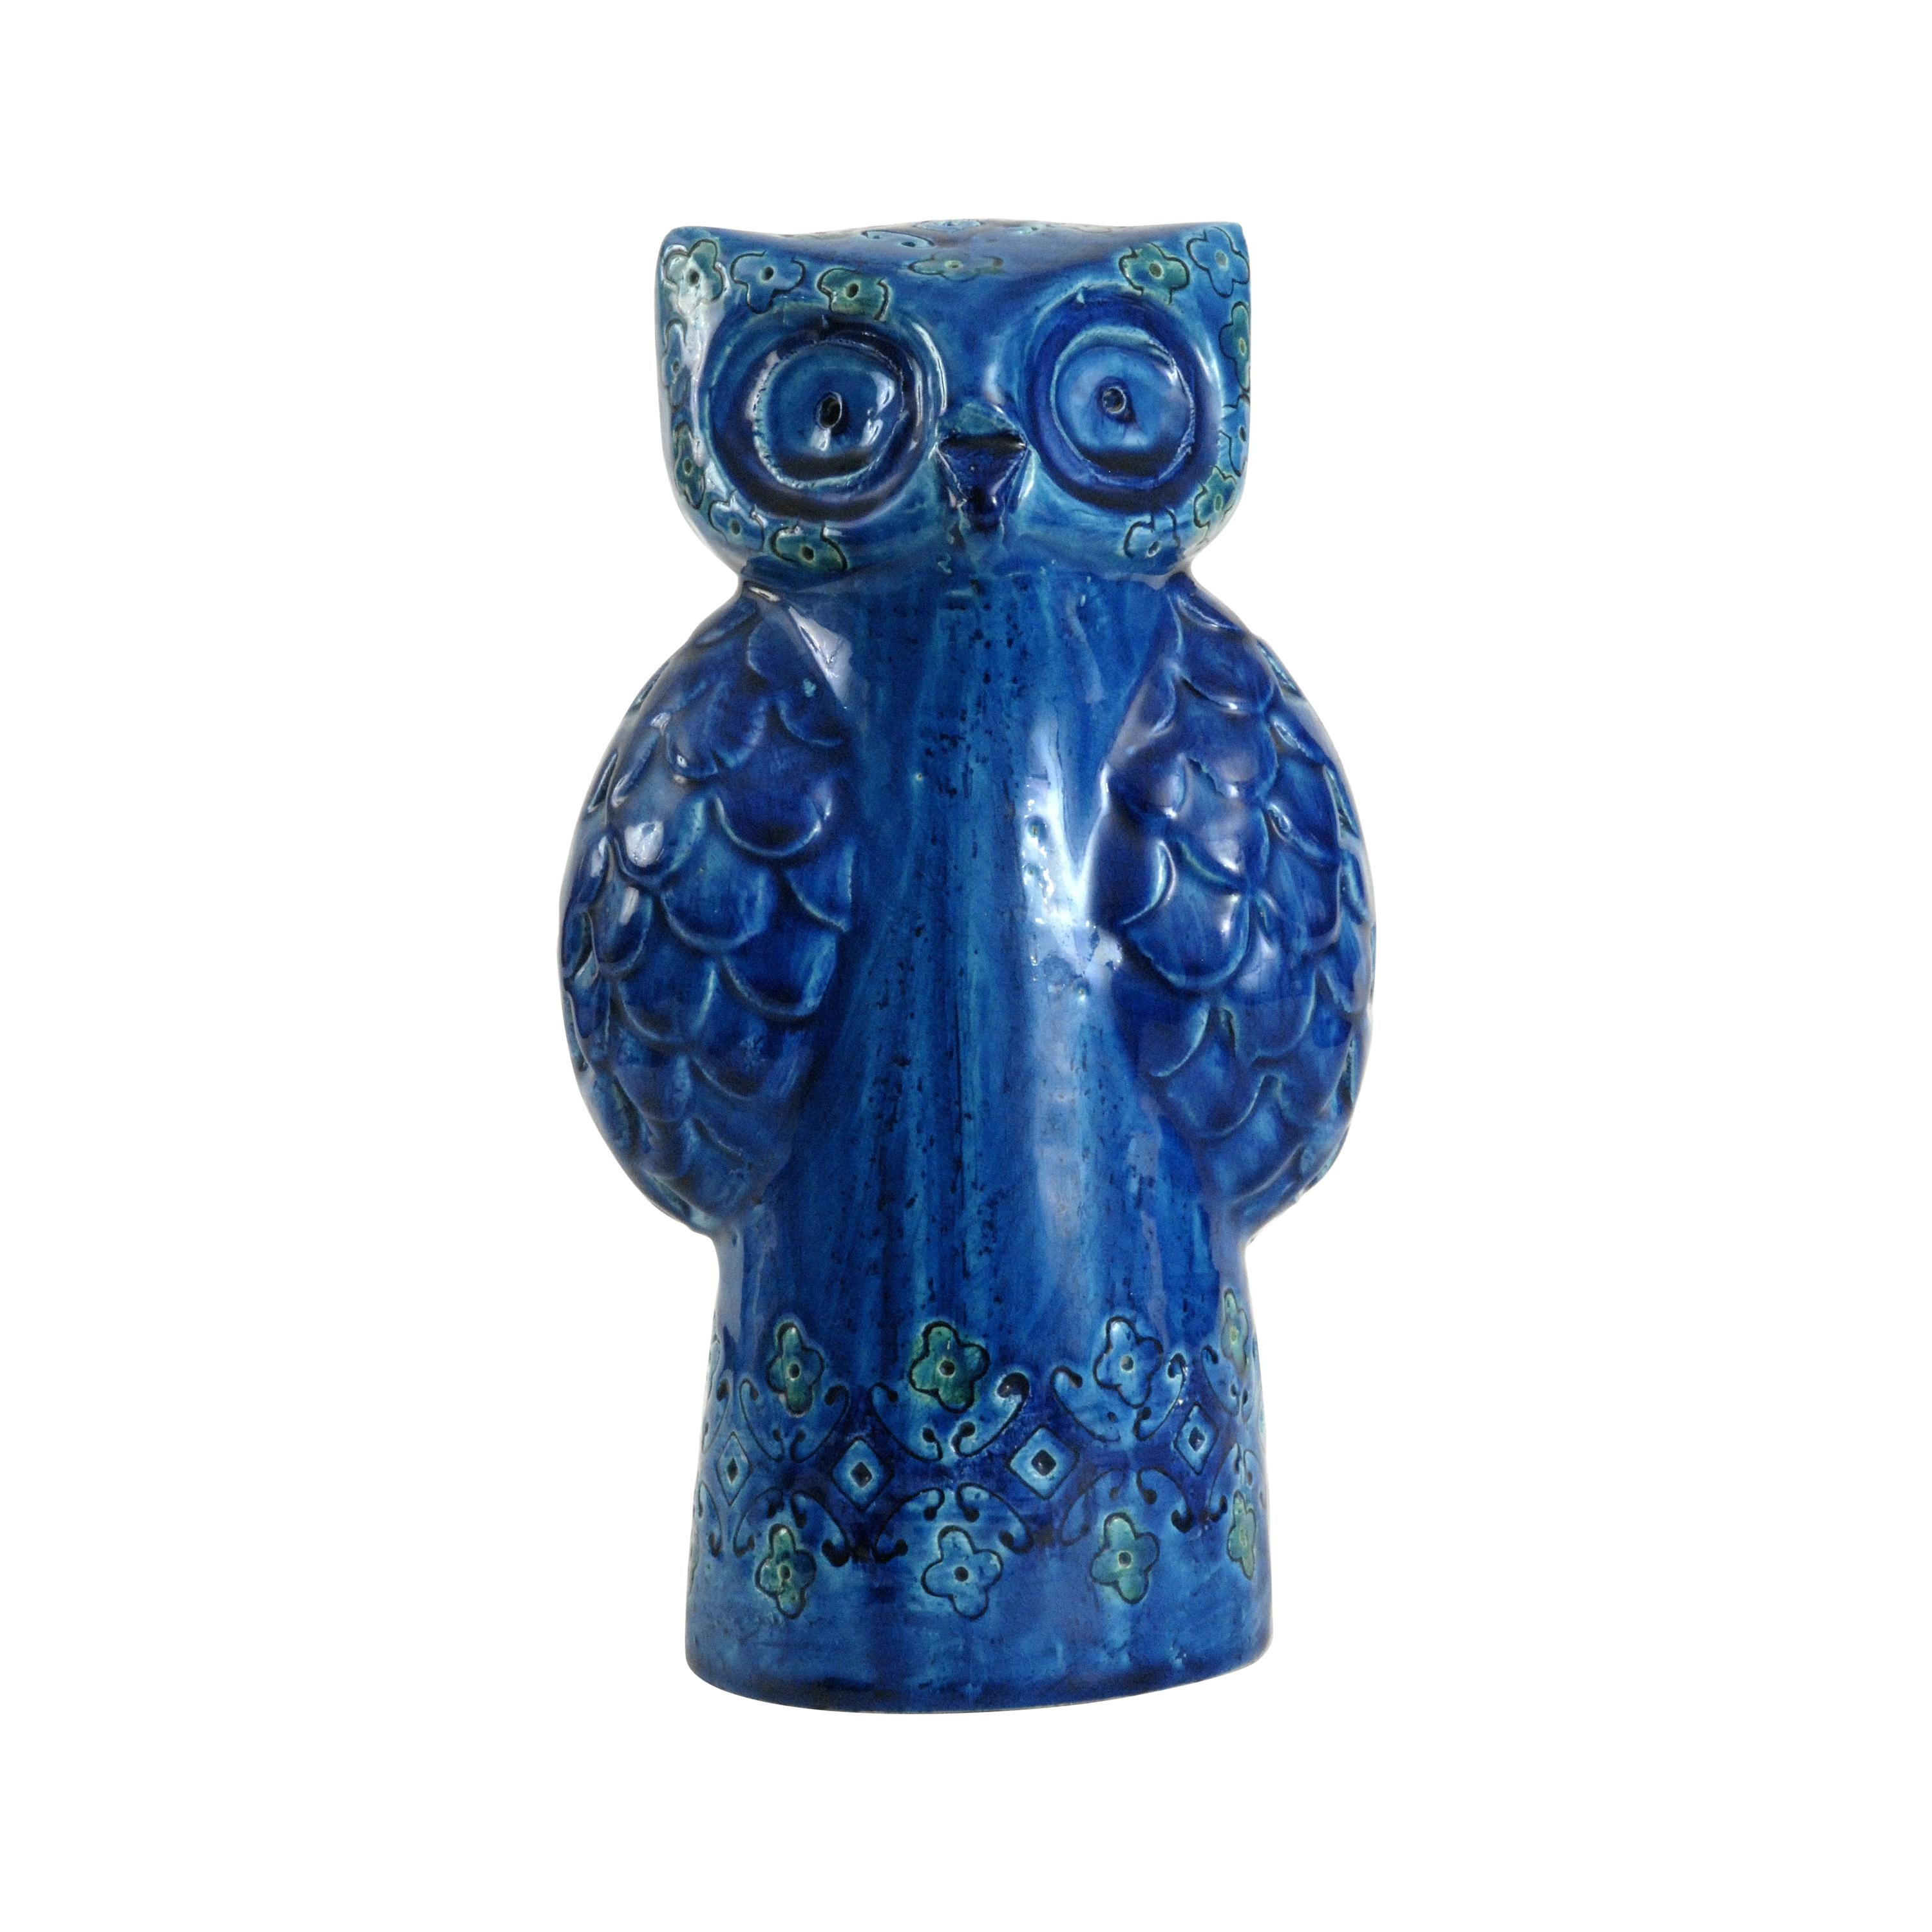 Bitossi Aldo Londi Blue Spagnolo Owl, Italy, circa 1968